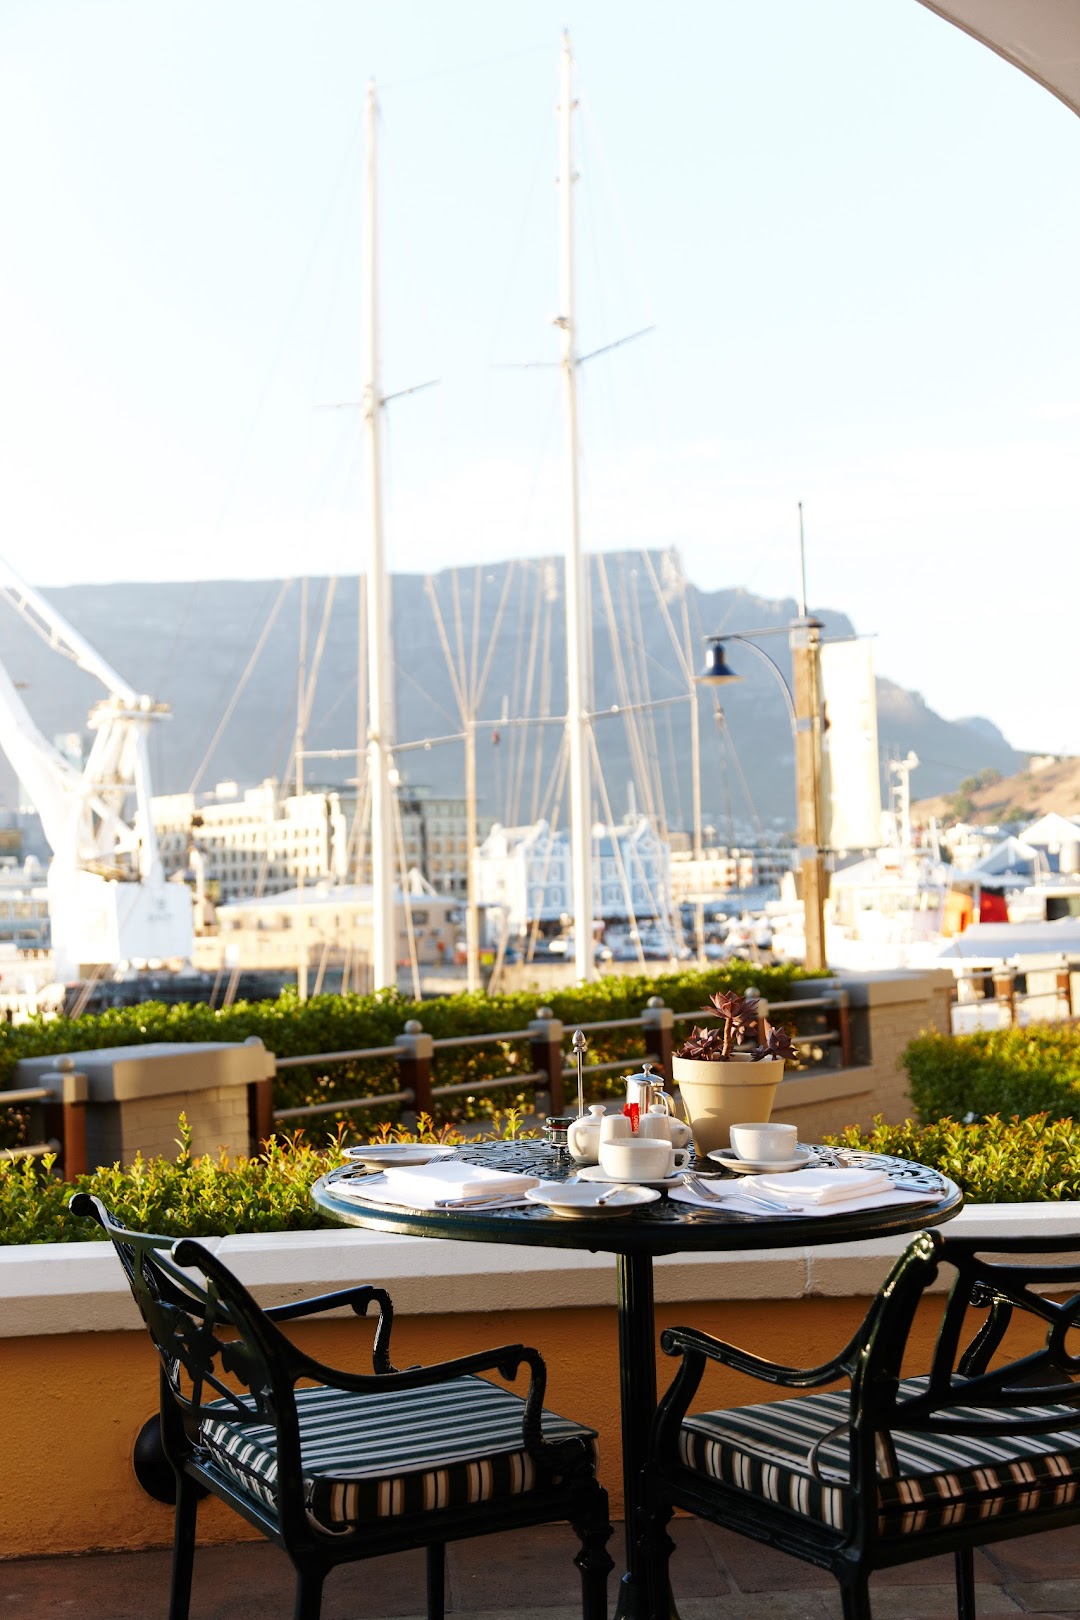 The Atlantic restaurant - The Table Bay hotel